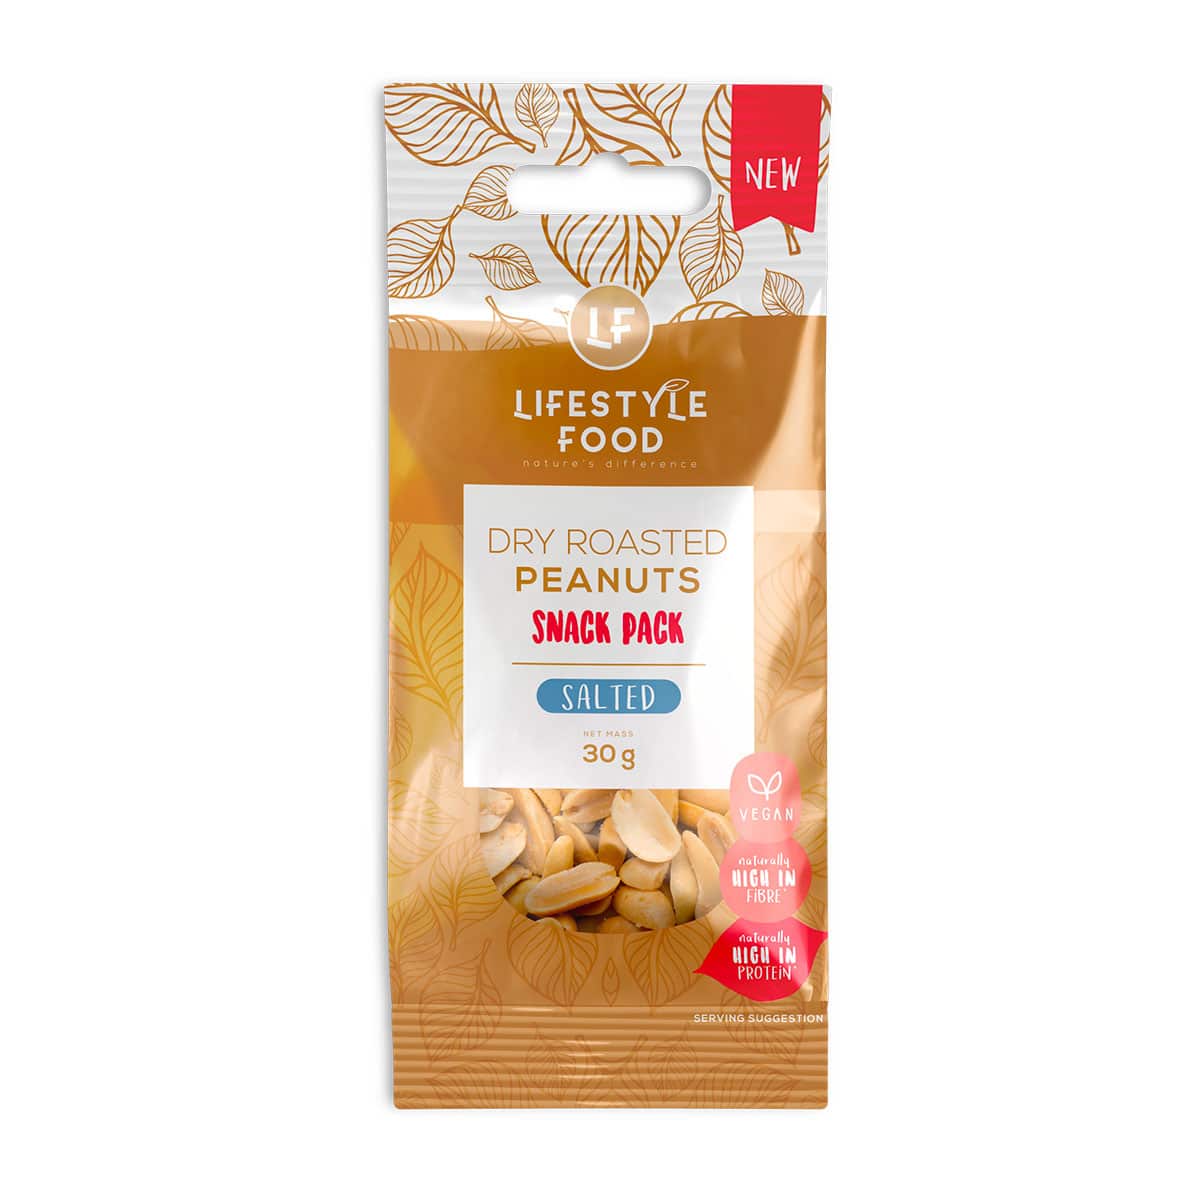 Lifestyle Food Dry Roasted Peanuts Snack Pack Salted - 30g